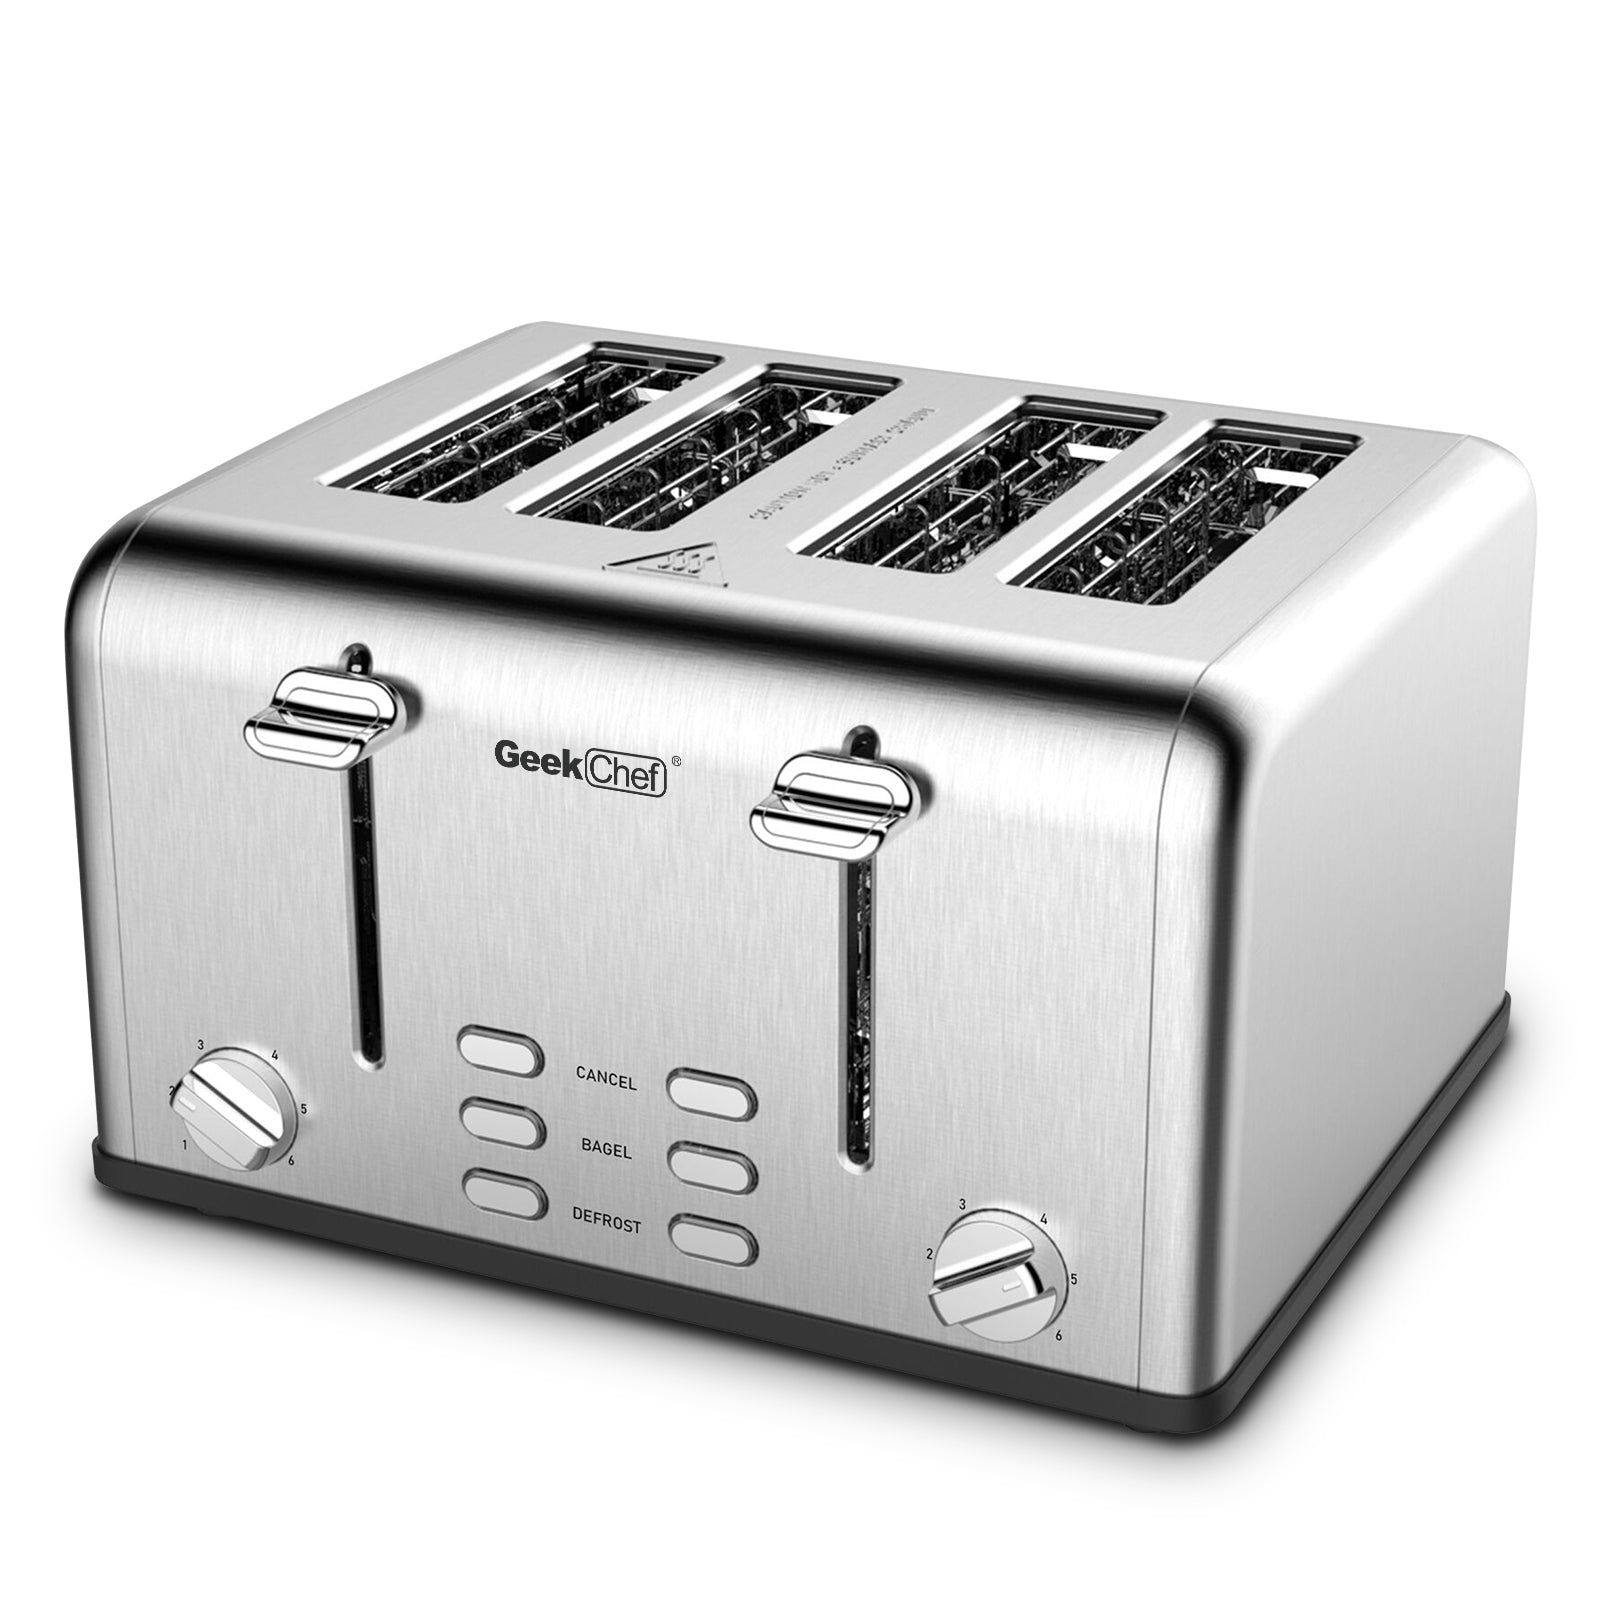 Hi Tek Stainless Steel Commercial Toaster - 4-Slice, 1 1/2 Slots